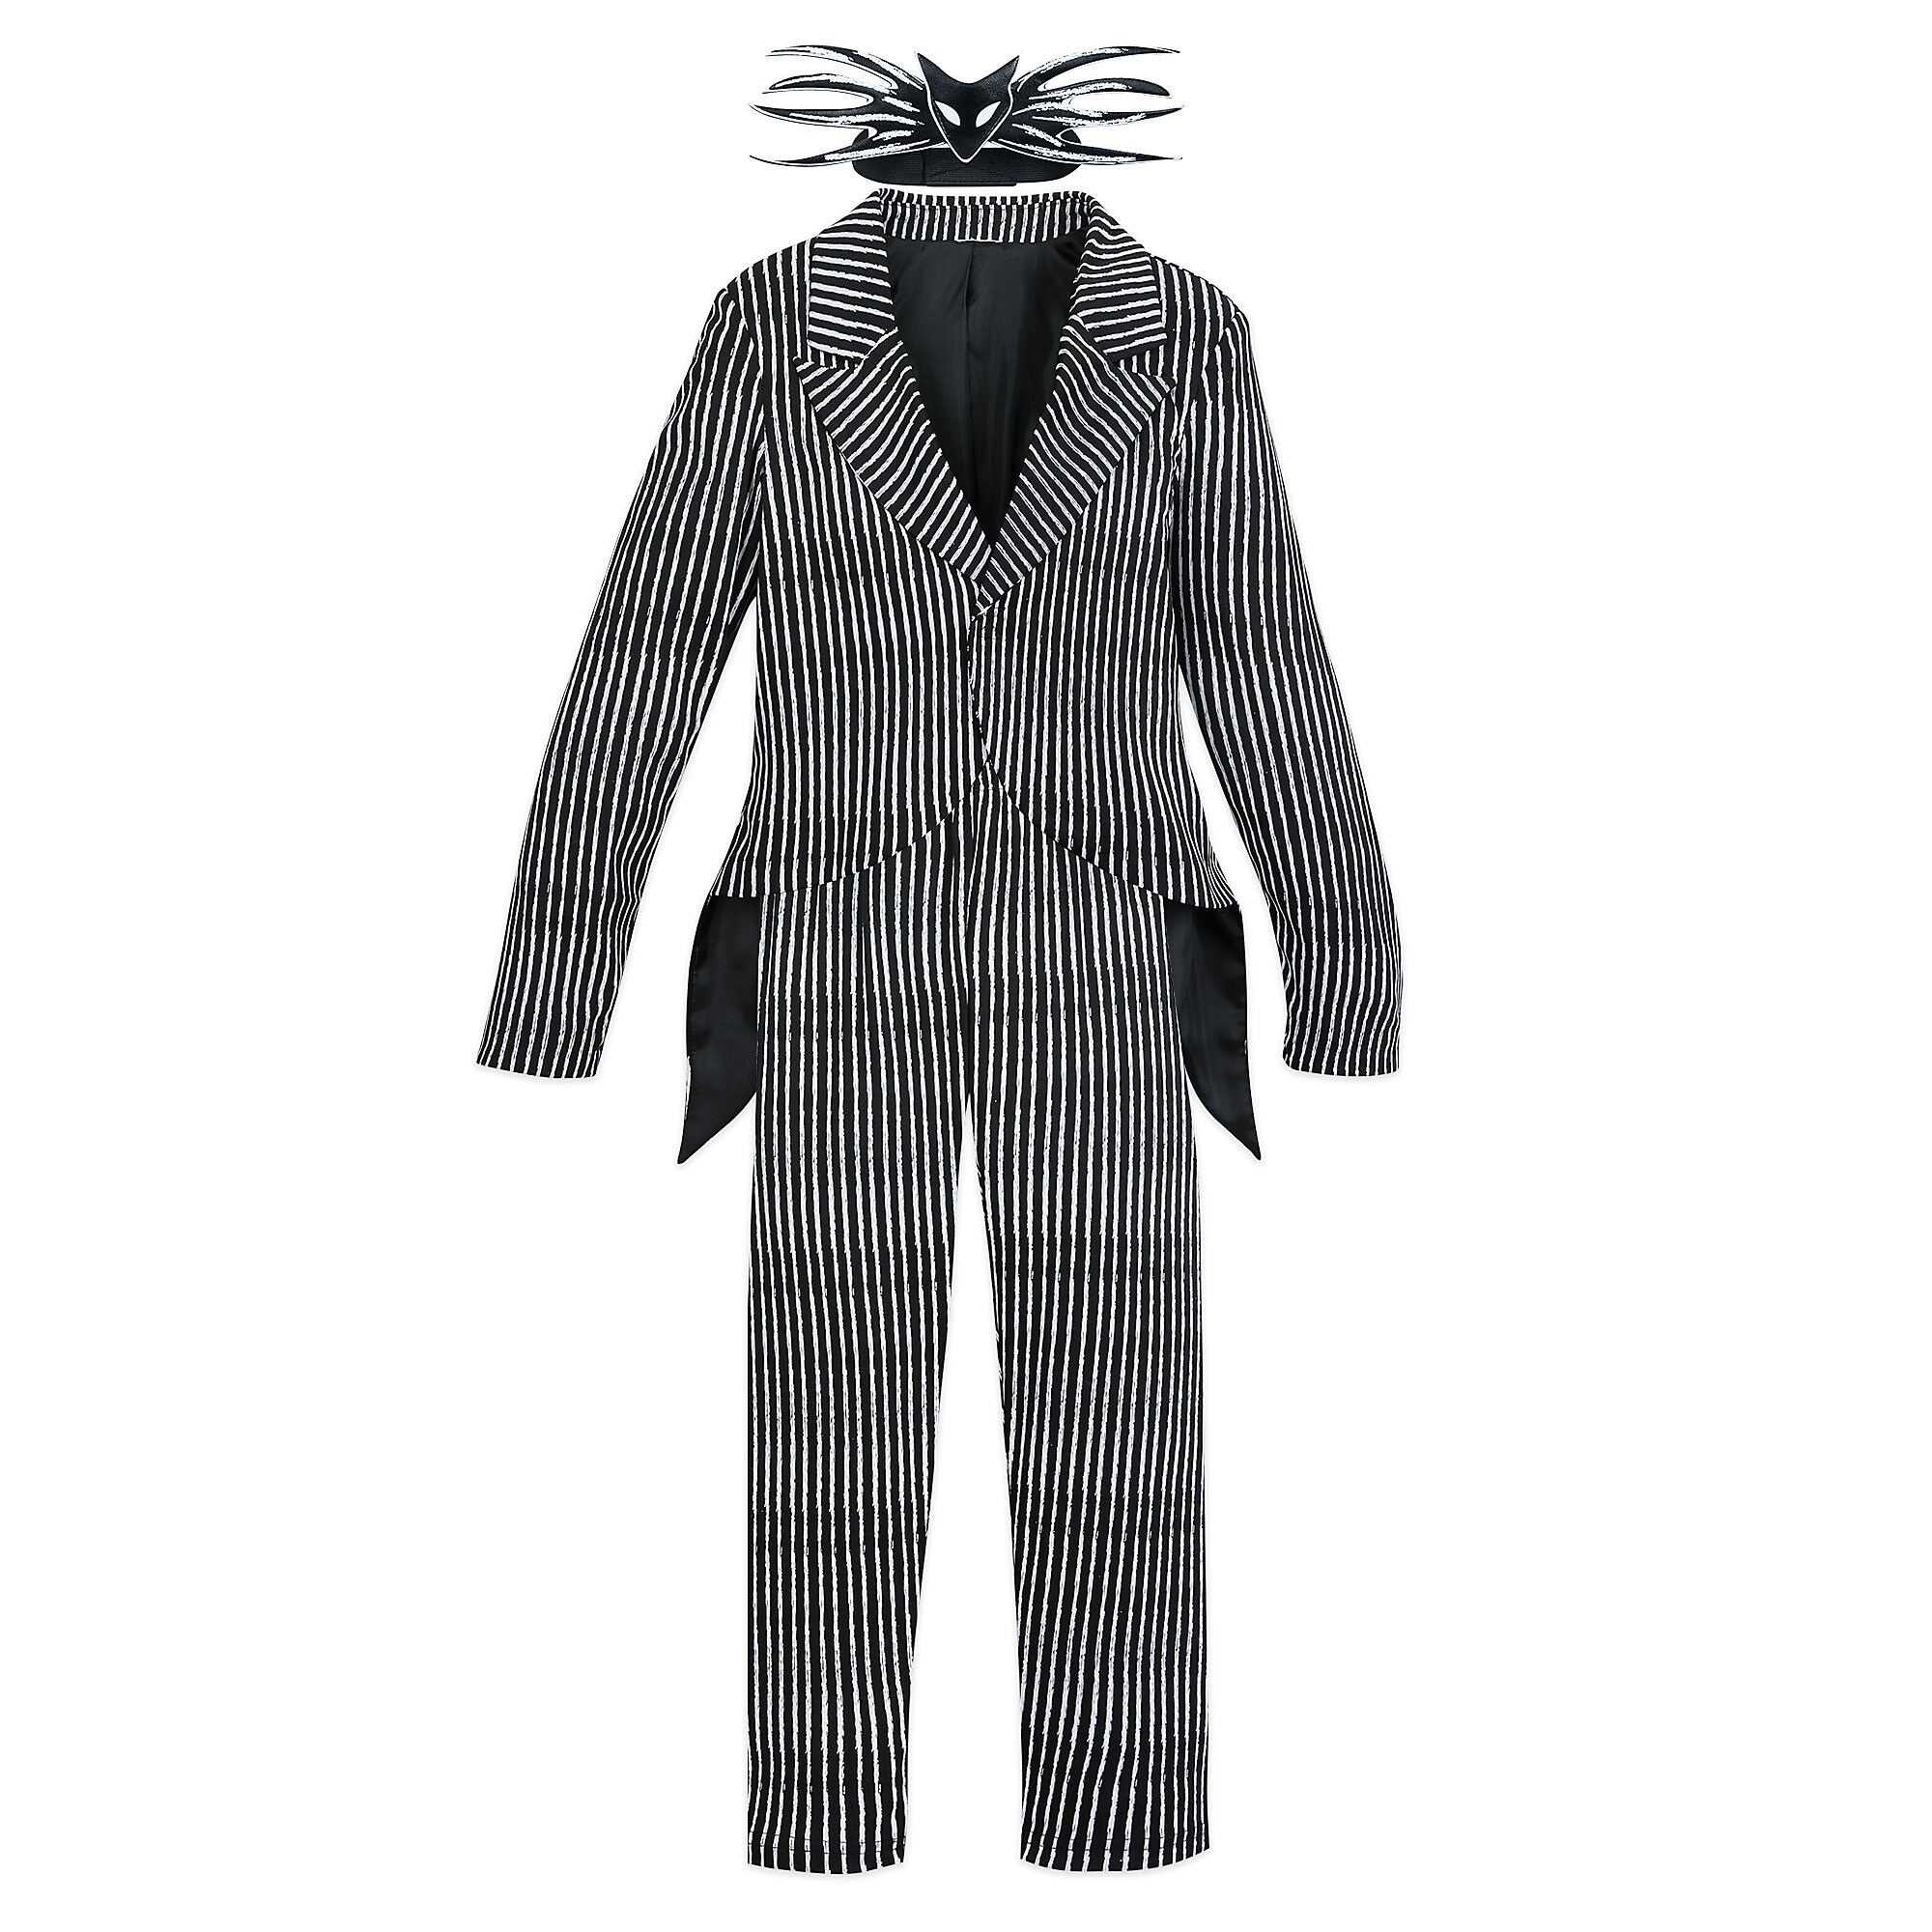 Jack Skellington Costume for Kids - The Nightmare Before Christmas